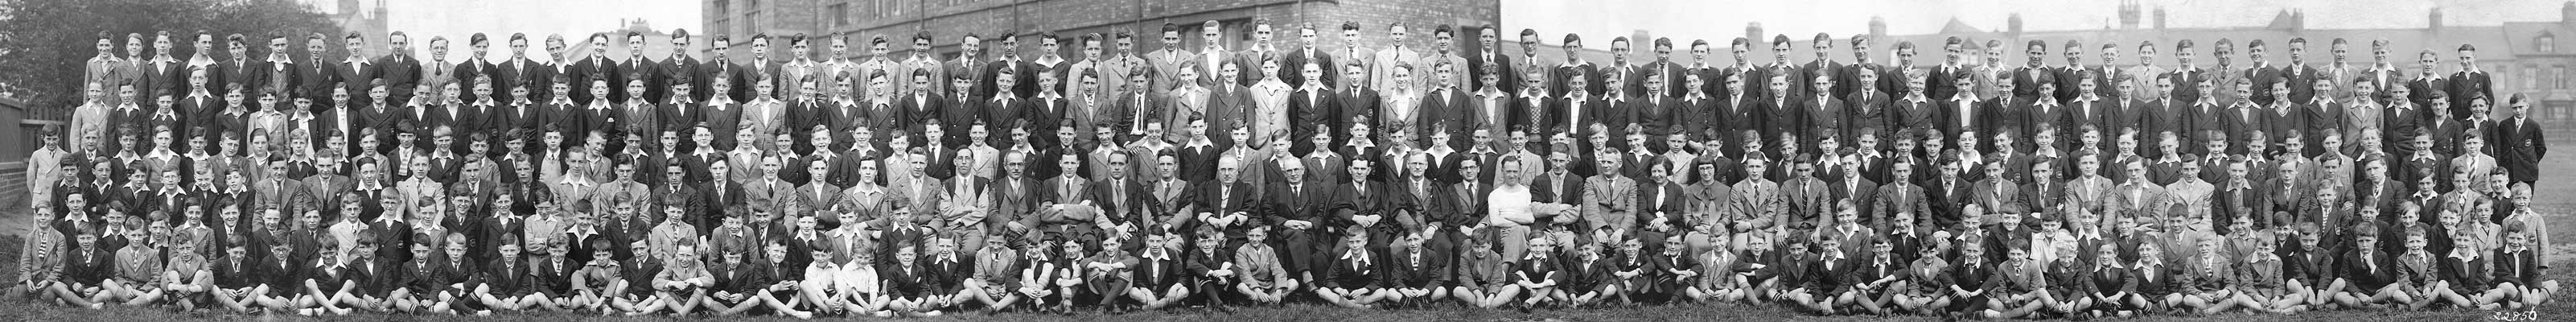 1935/6 - All School